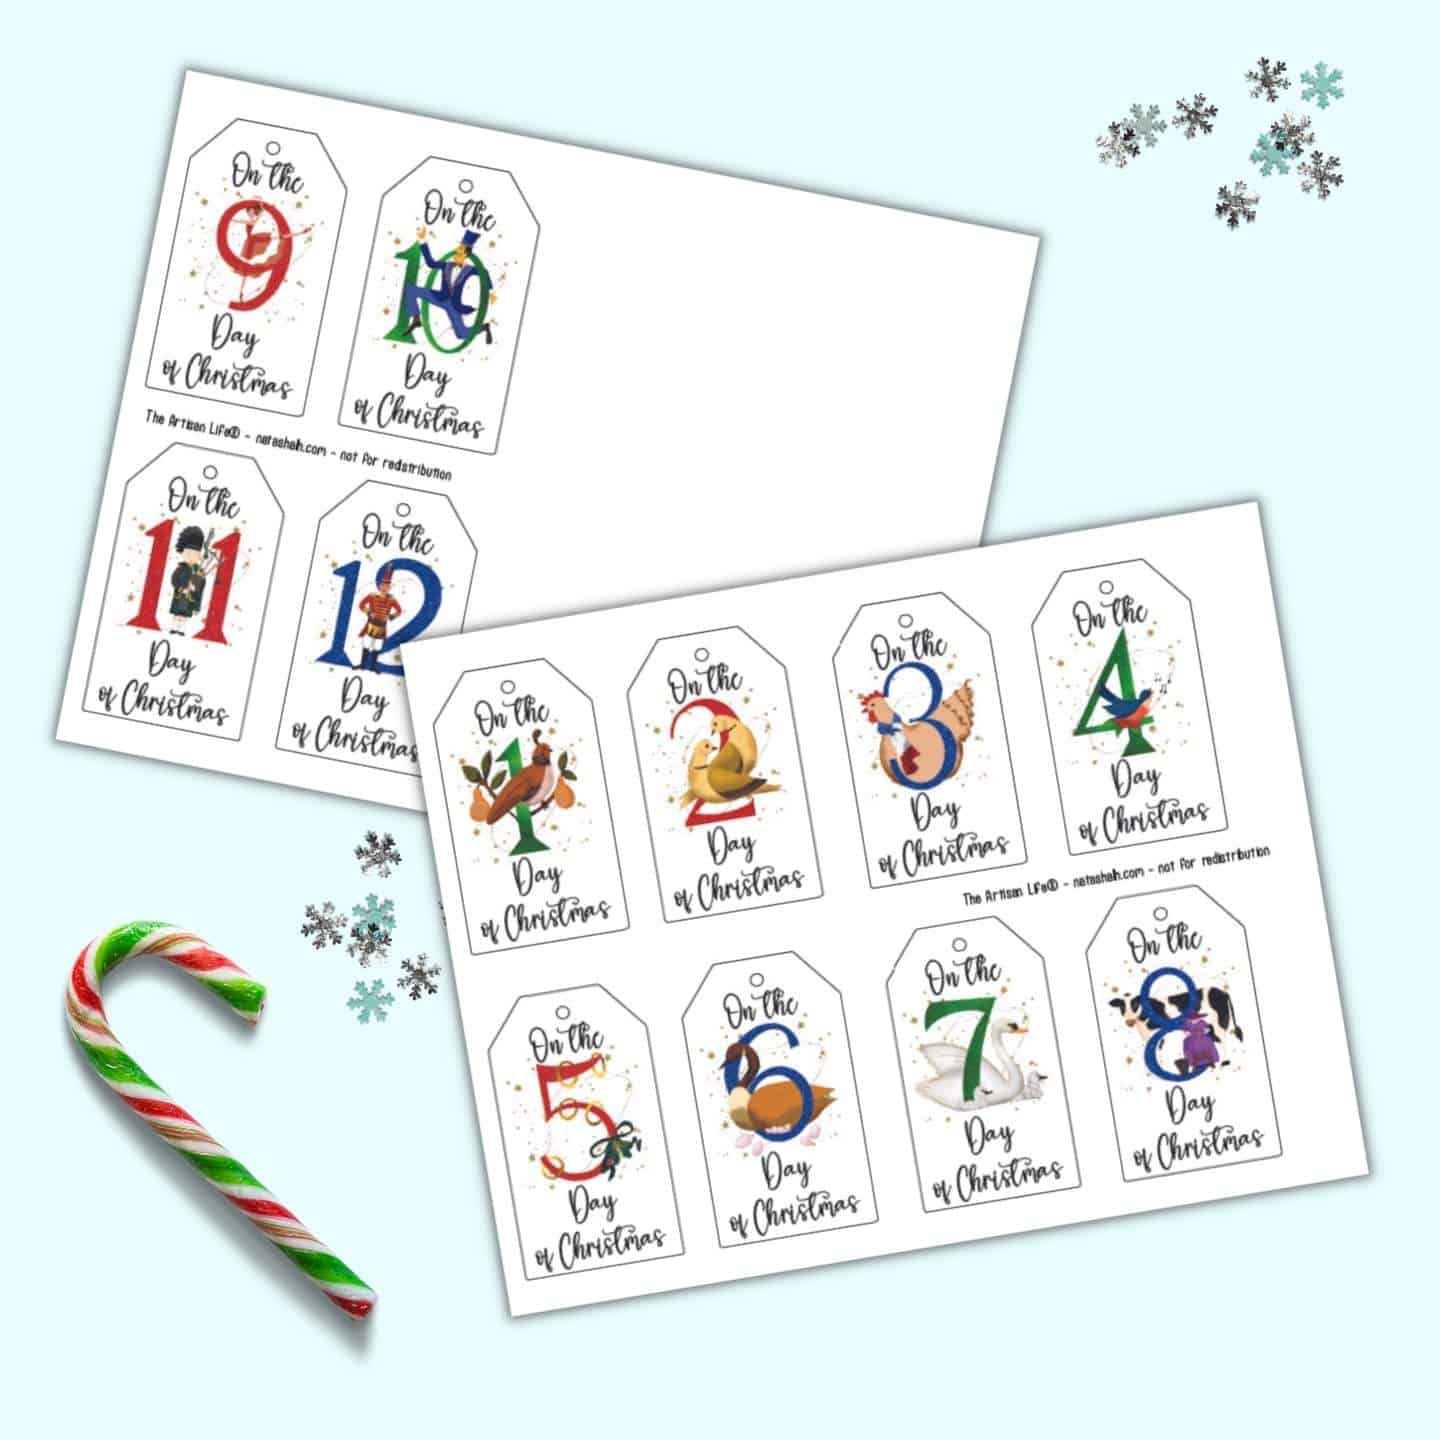 Christmas Countdown Day 7: Color Your Own Printable Christmas Gift Tags -  Simple Fun for Kids